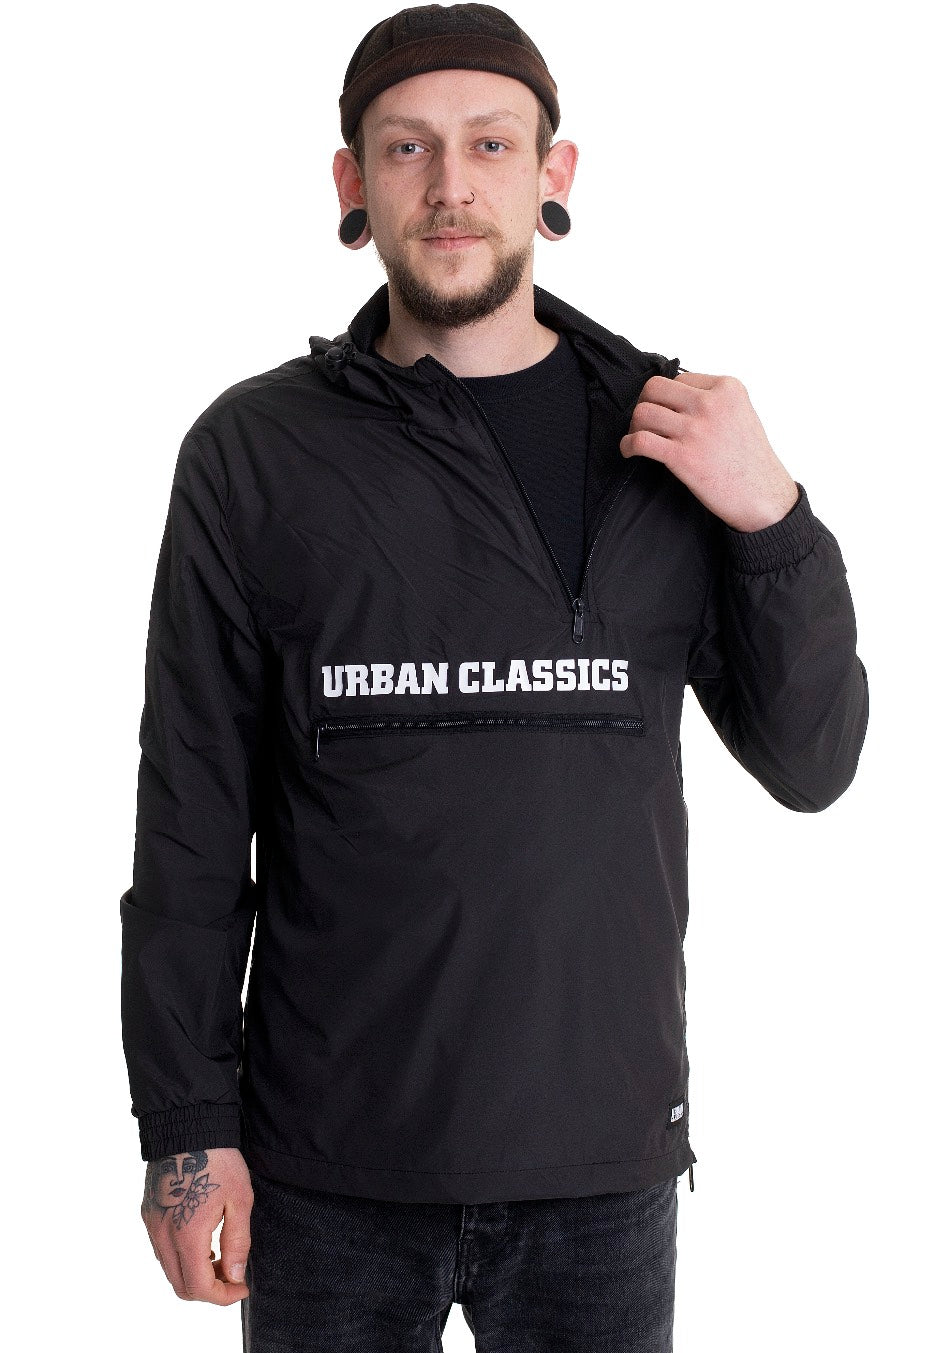 Urban Classics - Commuter Pull Over Black - Jacket